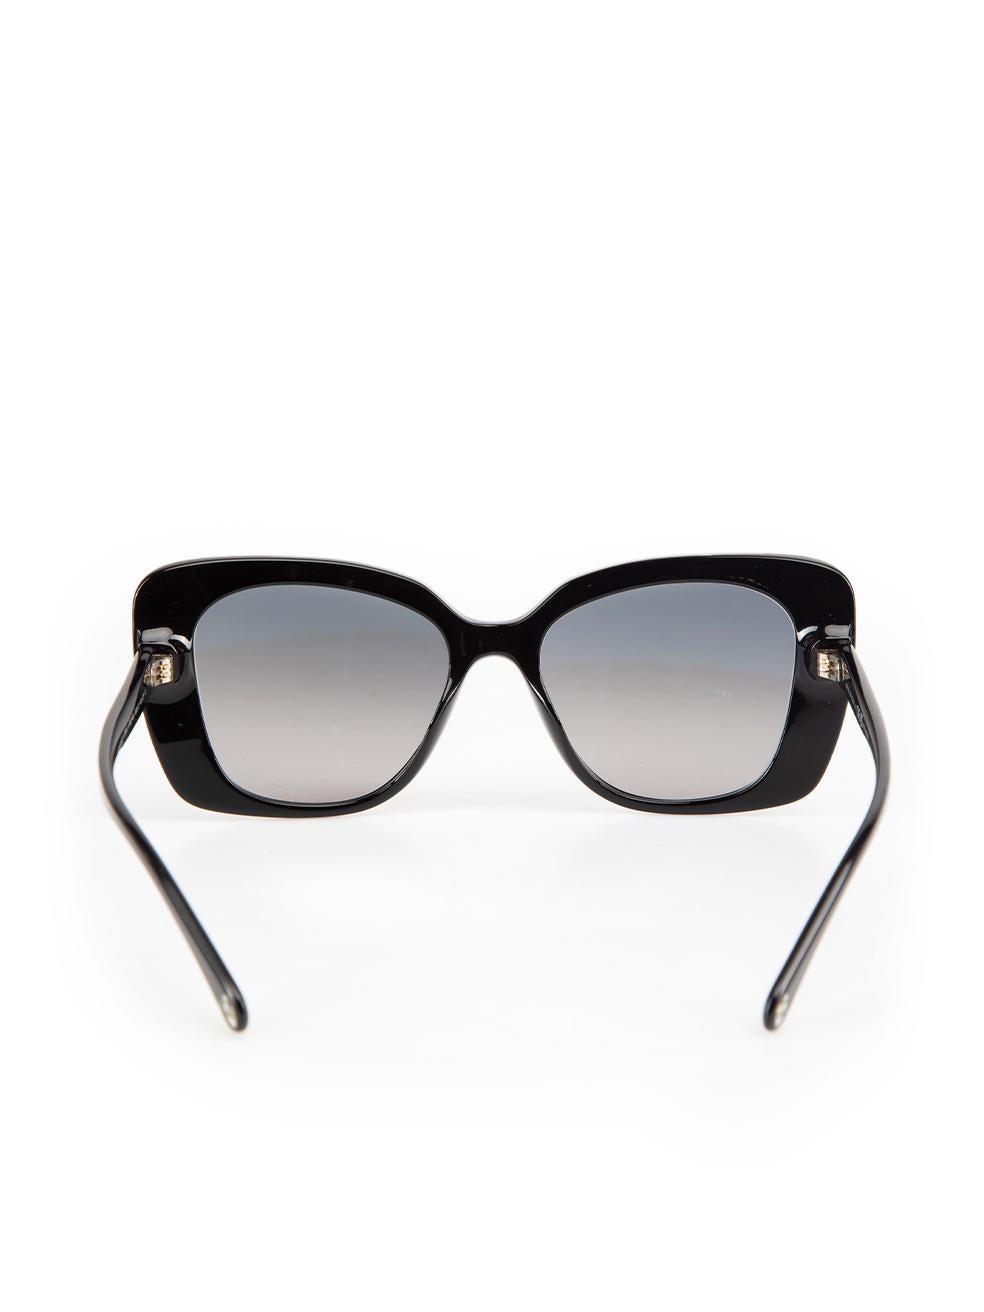 Women's Chanel Black Rectangle Sunglasses For Sale